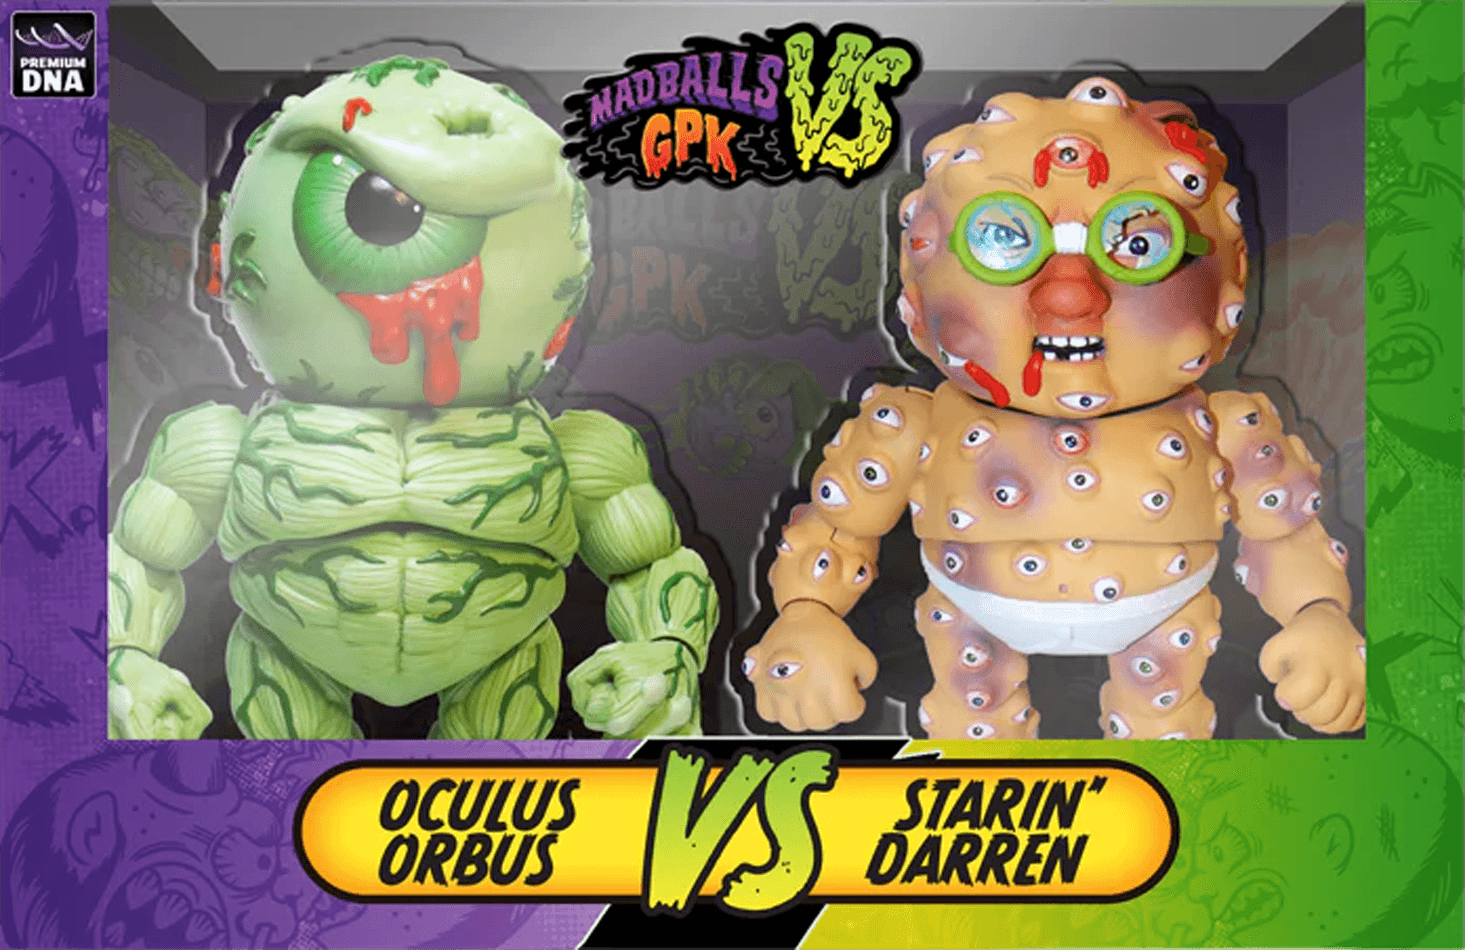 Madballs vs GPK - Starin' Darren vs Oculus Orbus Action Figure Set